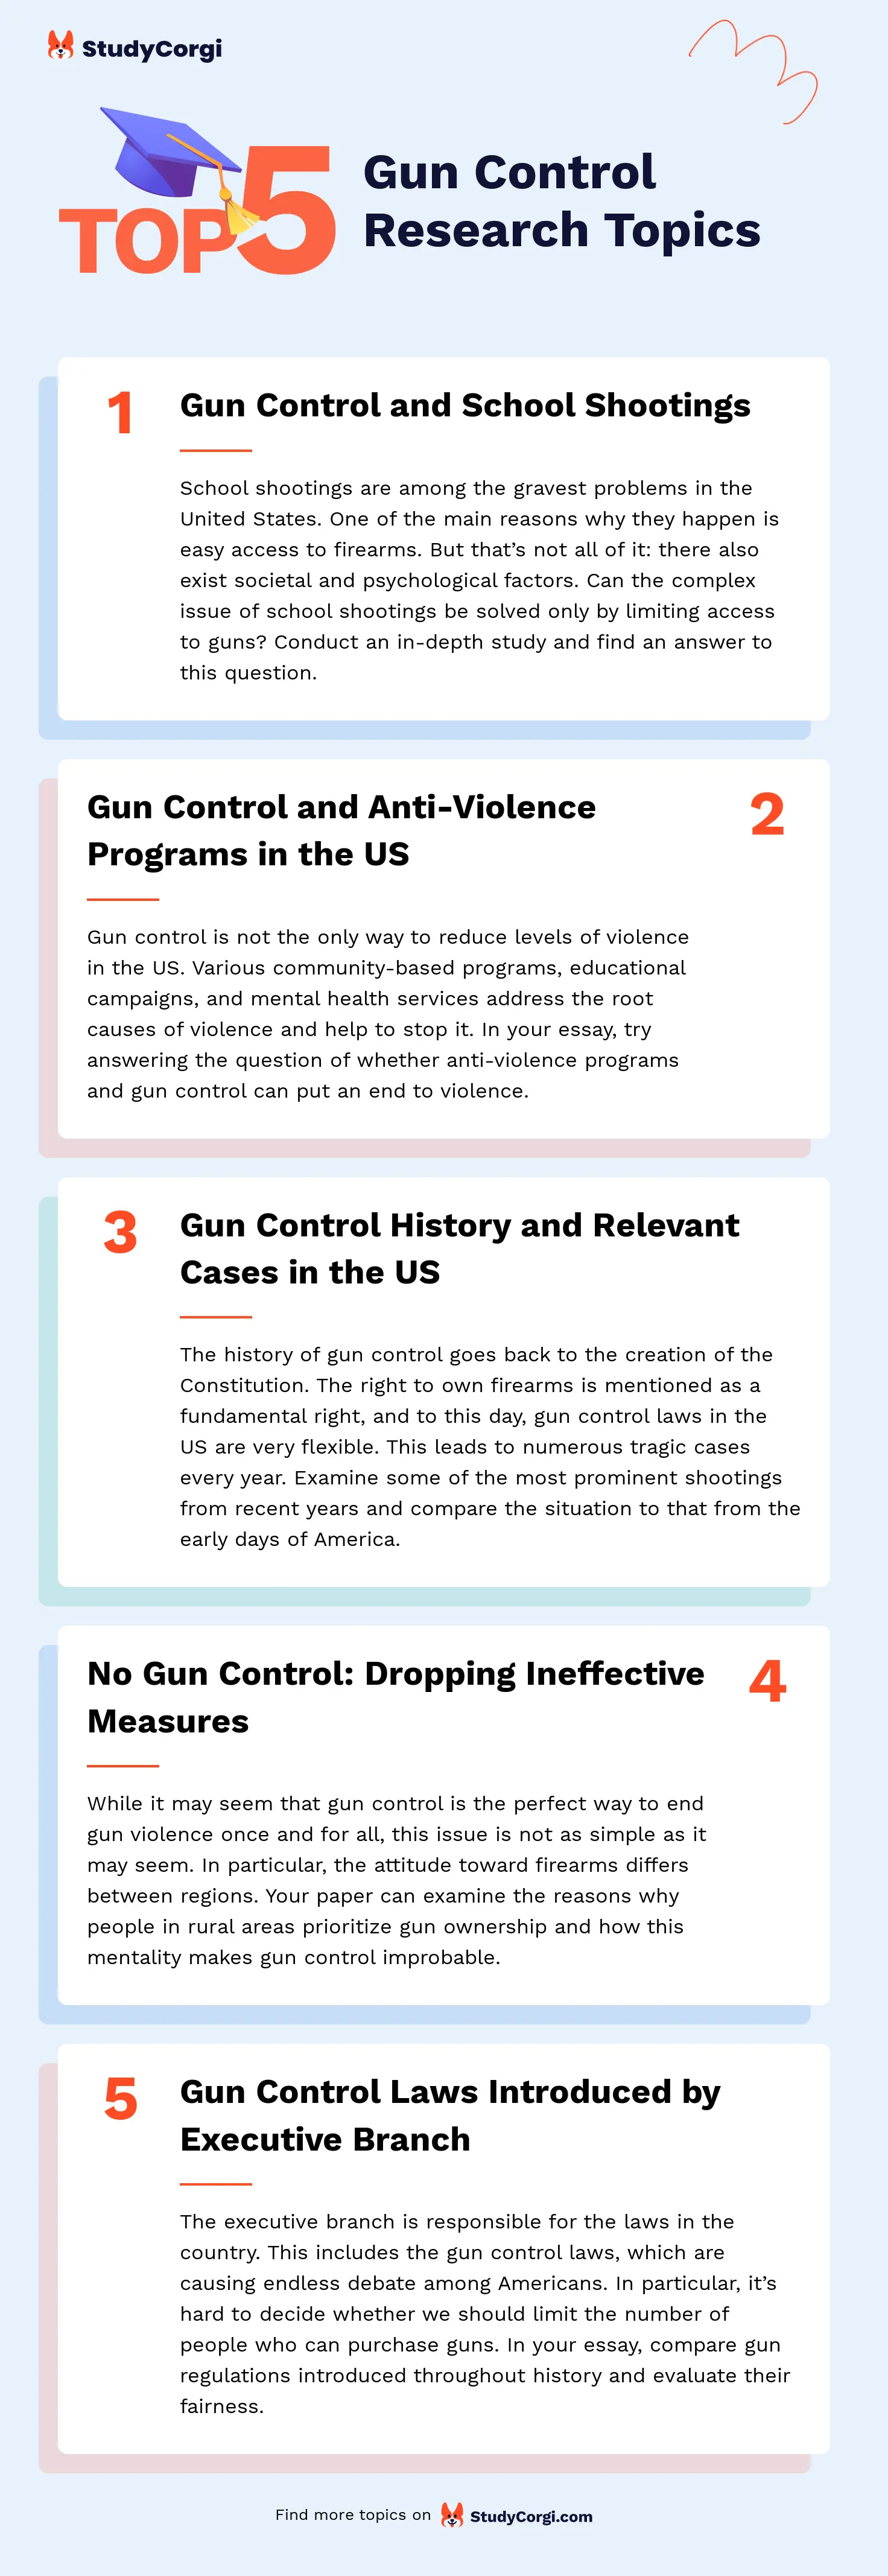 TOP-5 Gun Control Research Topics